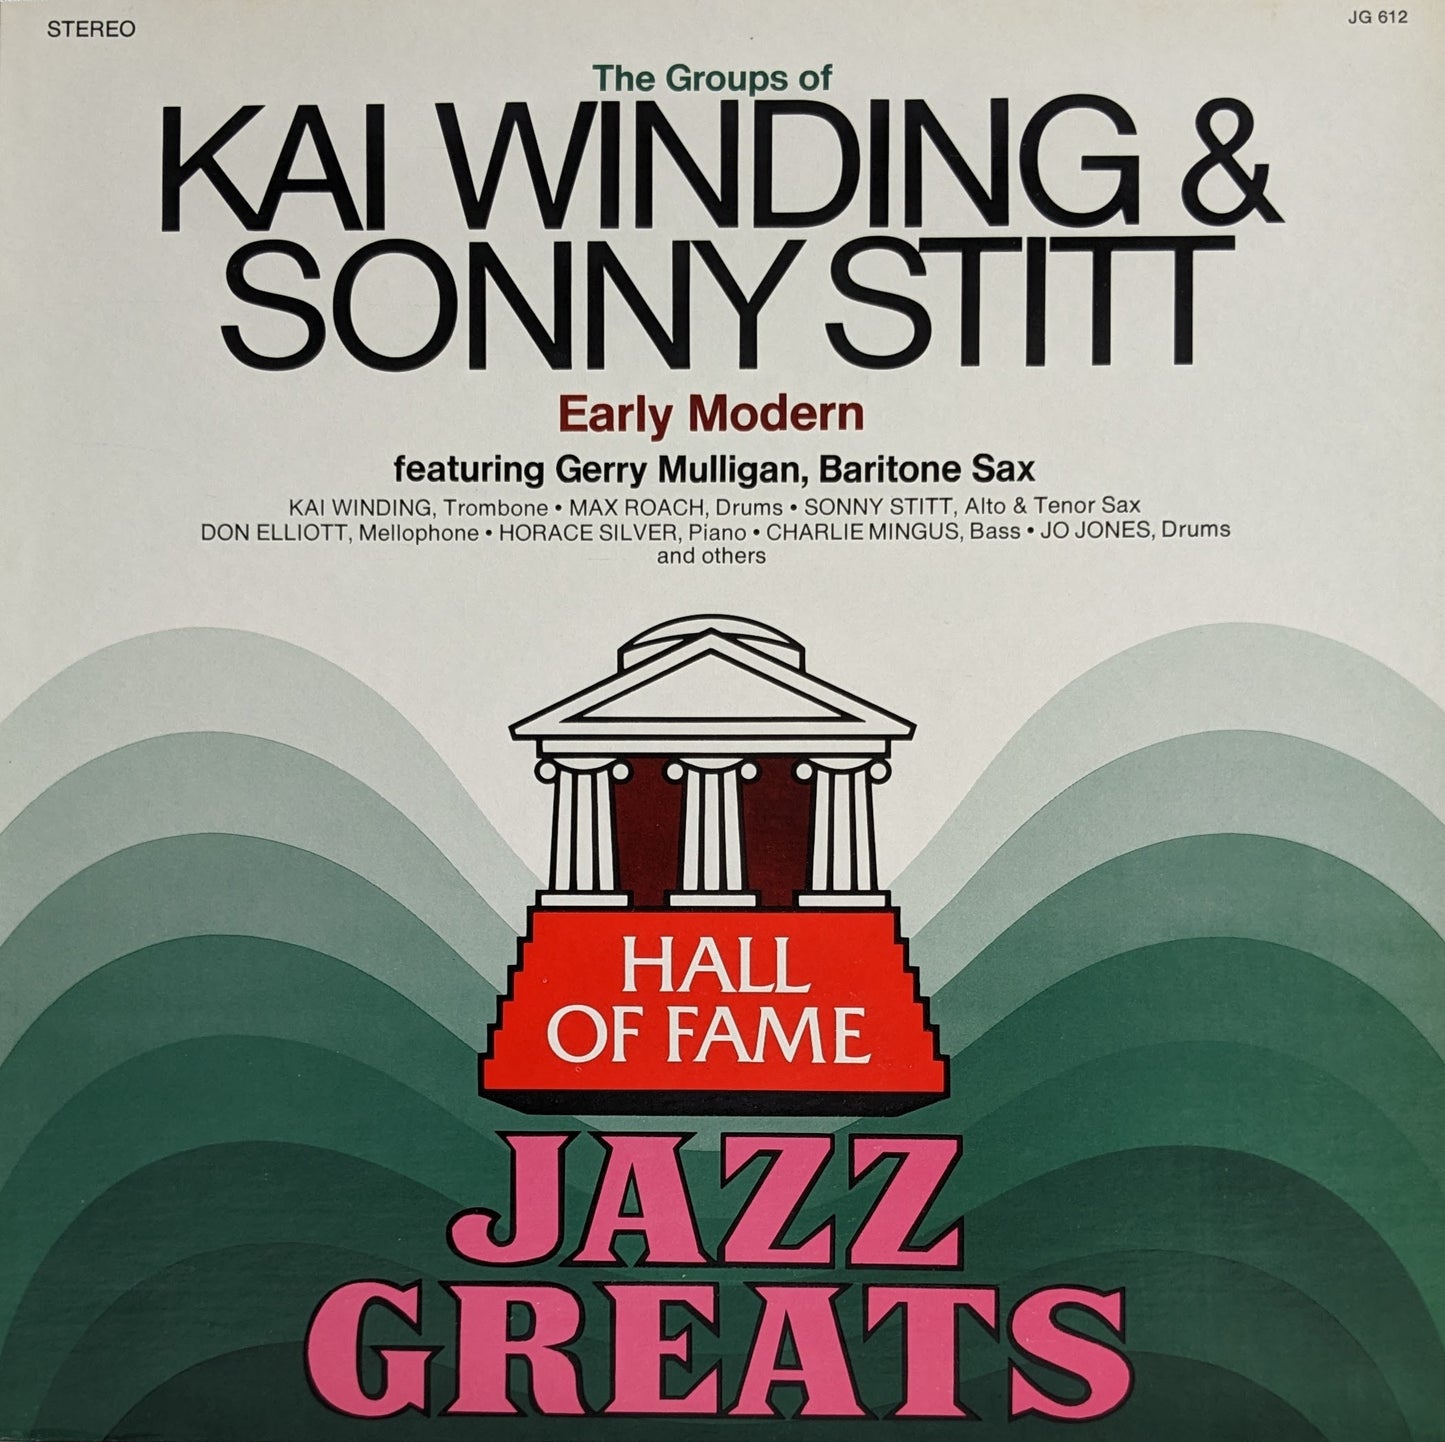 Kai Winding & Sonny Stitt Featuring Gerry Mulligan - Early Modern